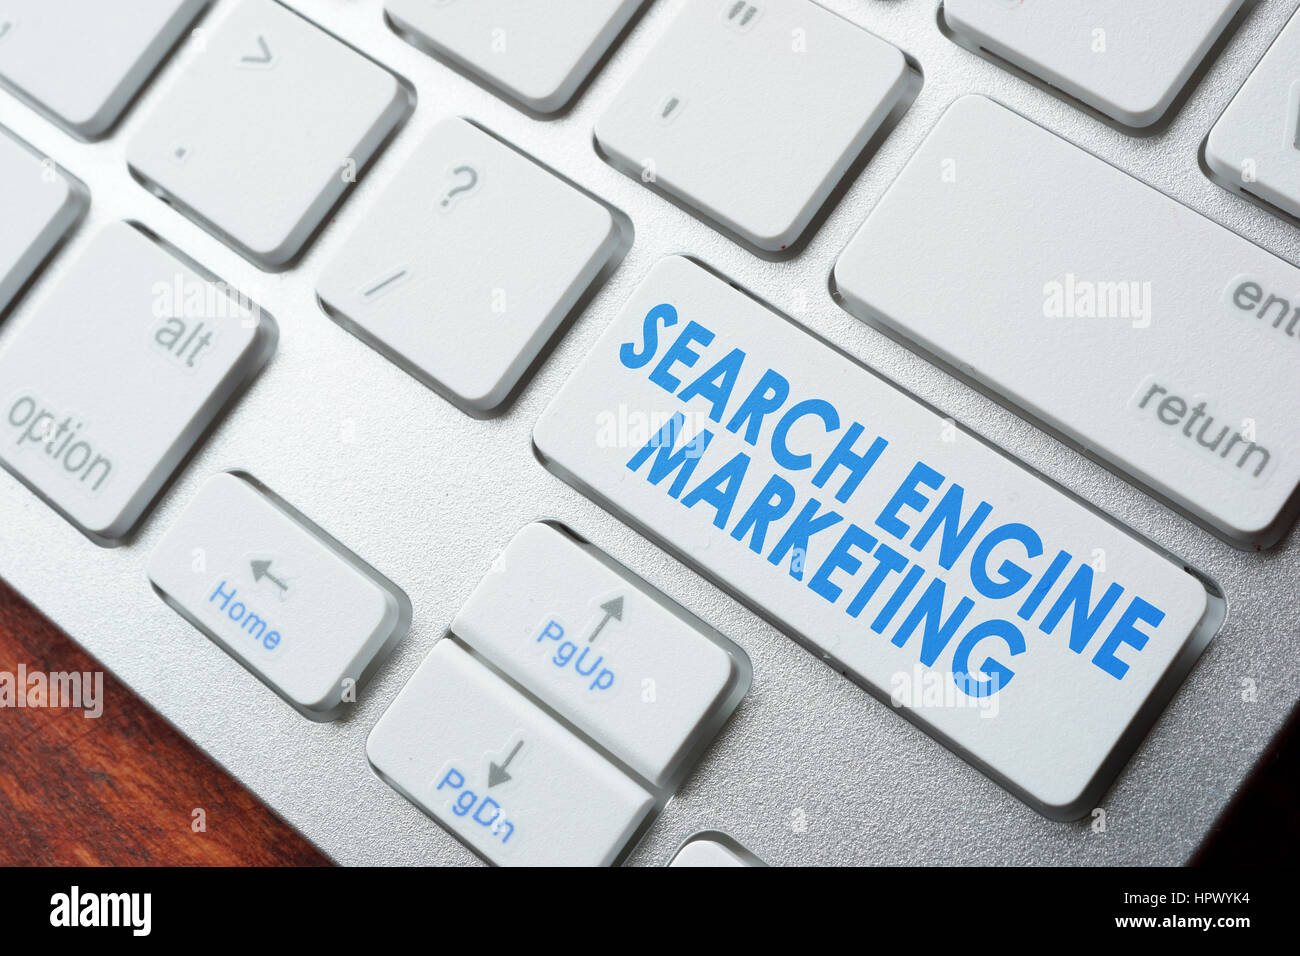 Abbreviation SEM search engine marketing on a keyboard. Stock Photo